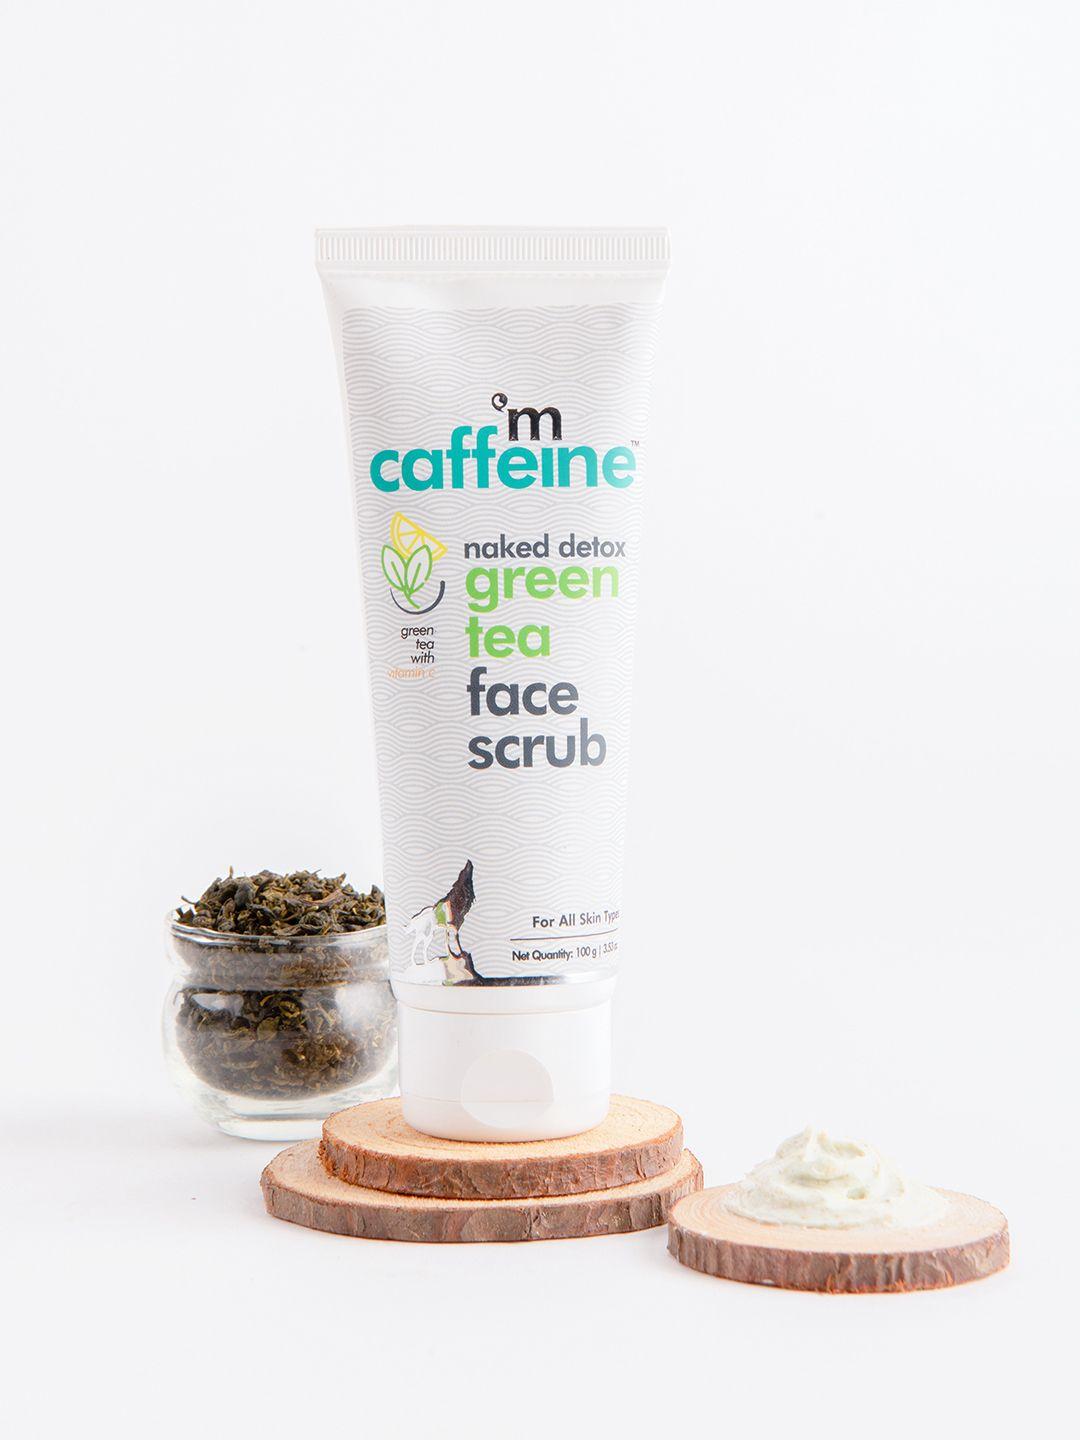 mcaffeine green tea face scrub with vitamin c for exfoliation & blackhead removal-100g